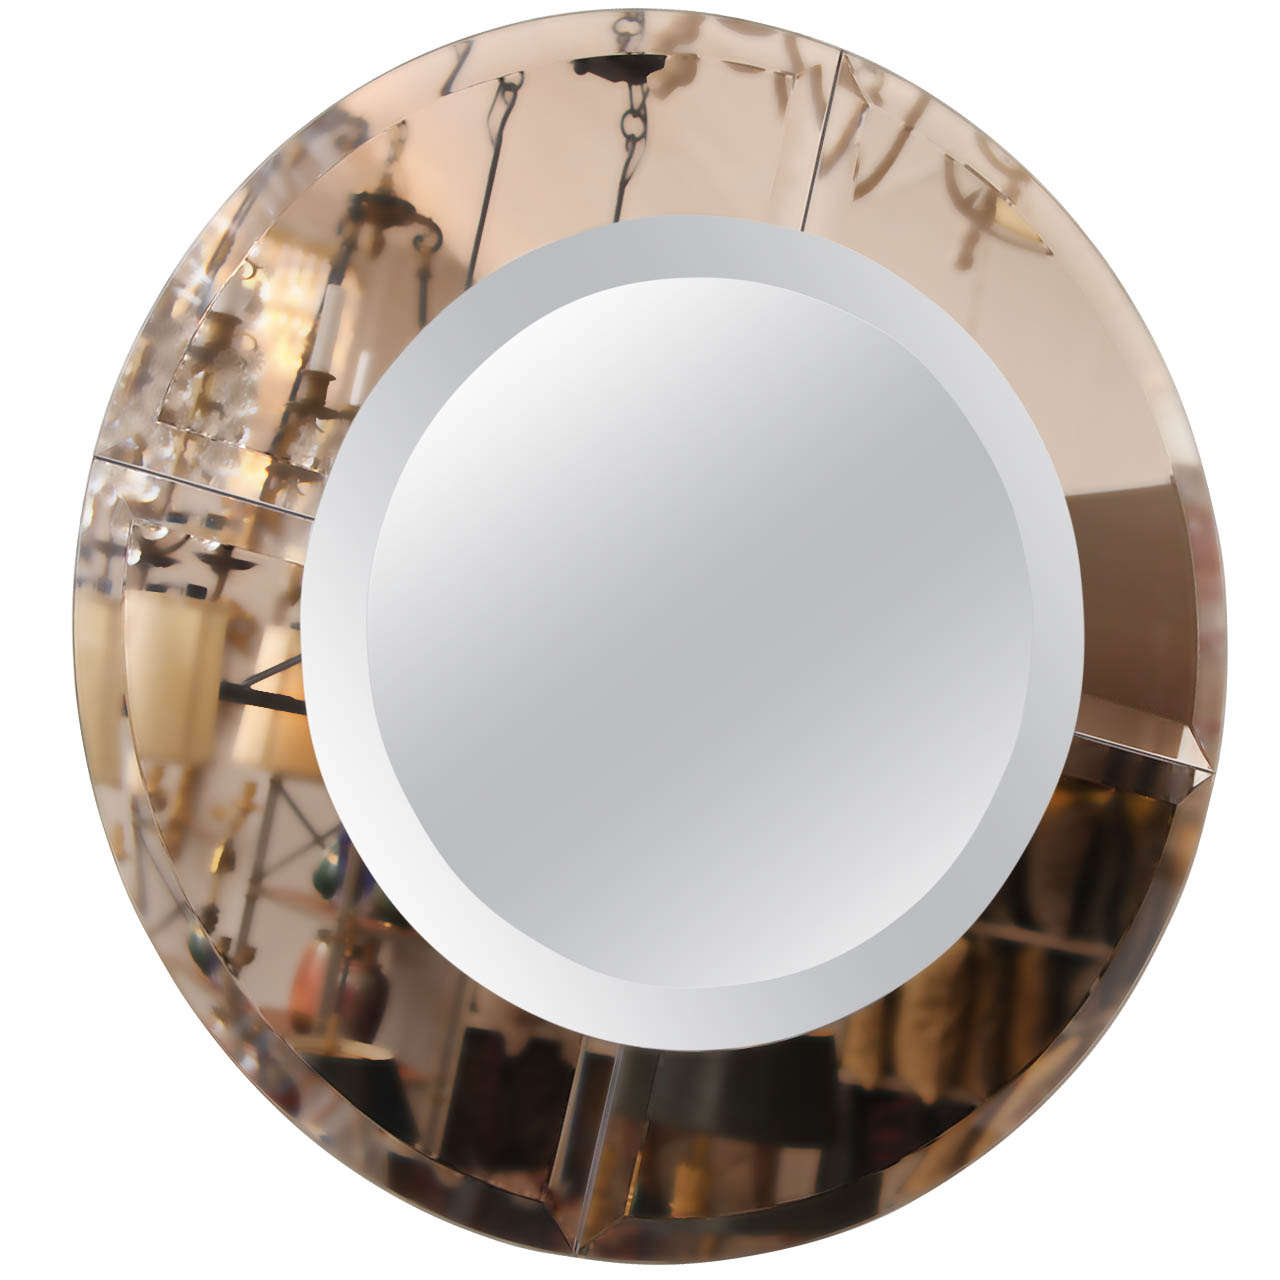  Round Contemporary Design Mirror